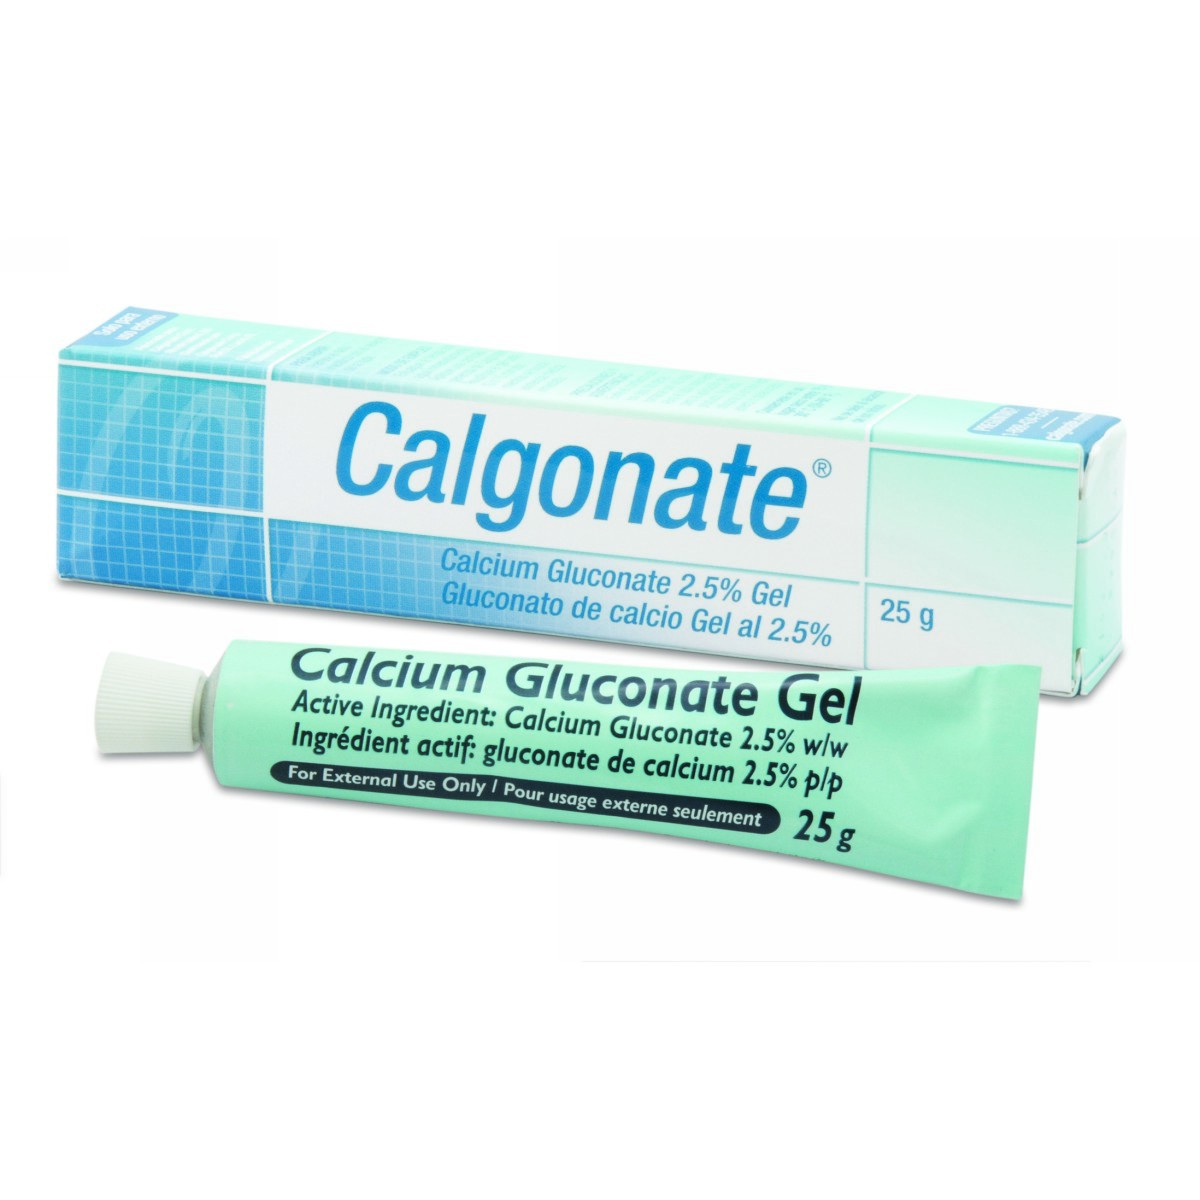 Honeywell 25 g Tube Calcium Gluconate Gel (1 Tube Per Box)